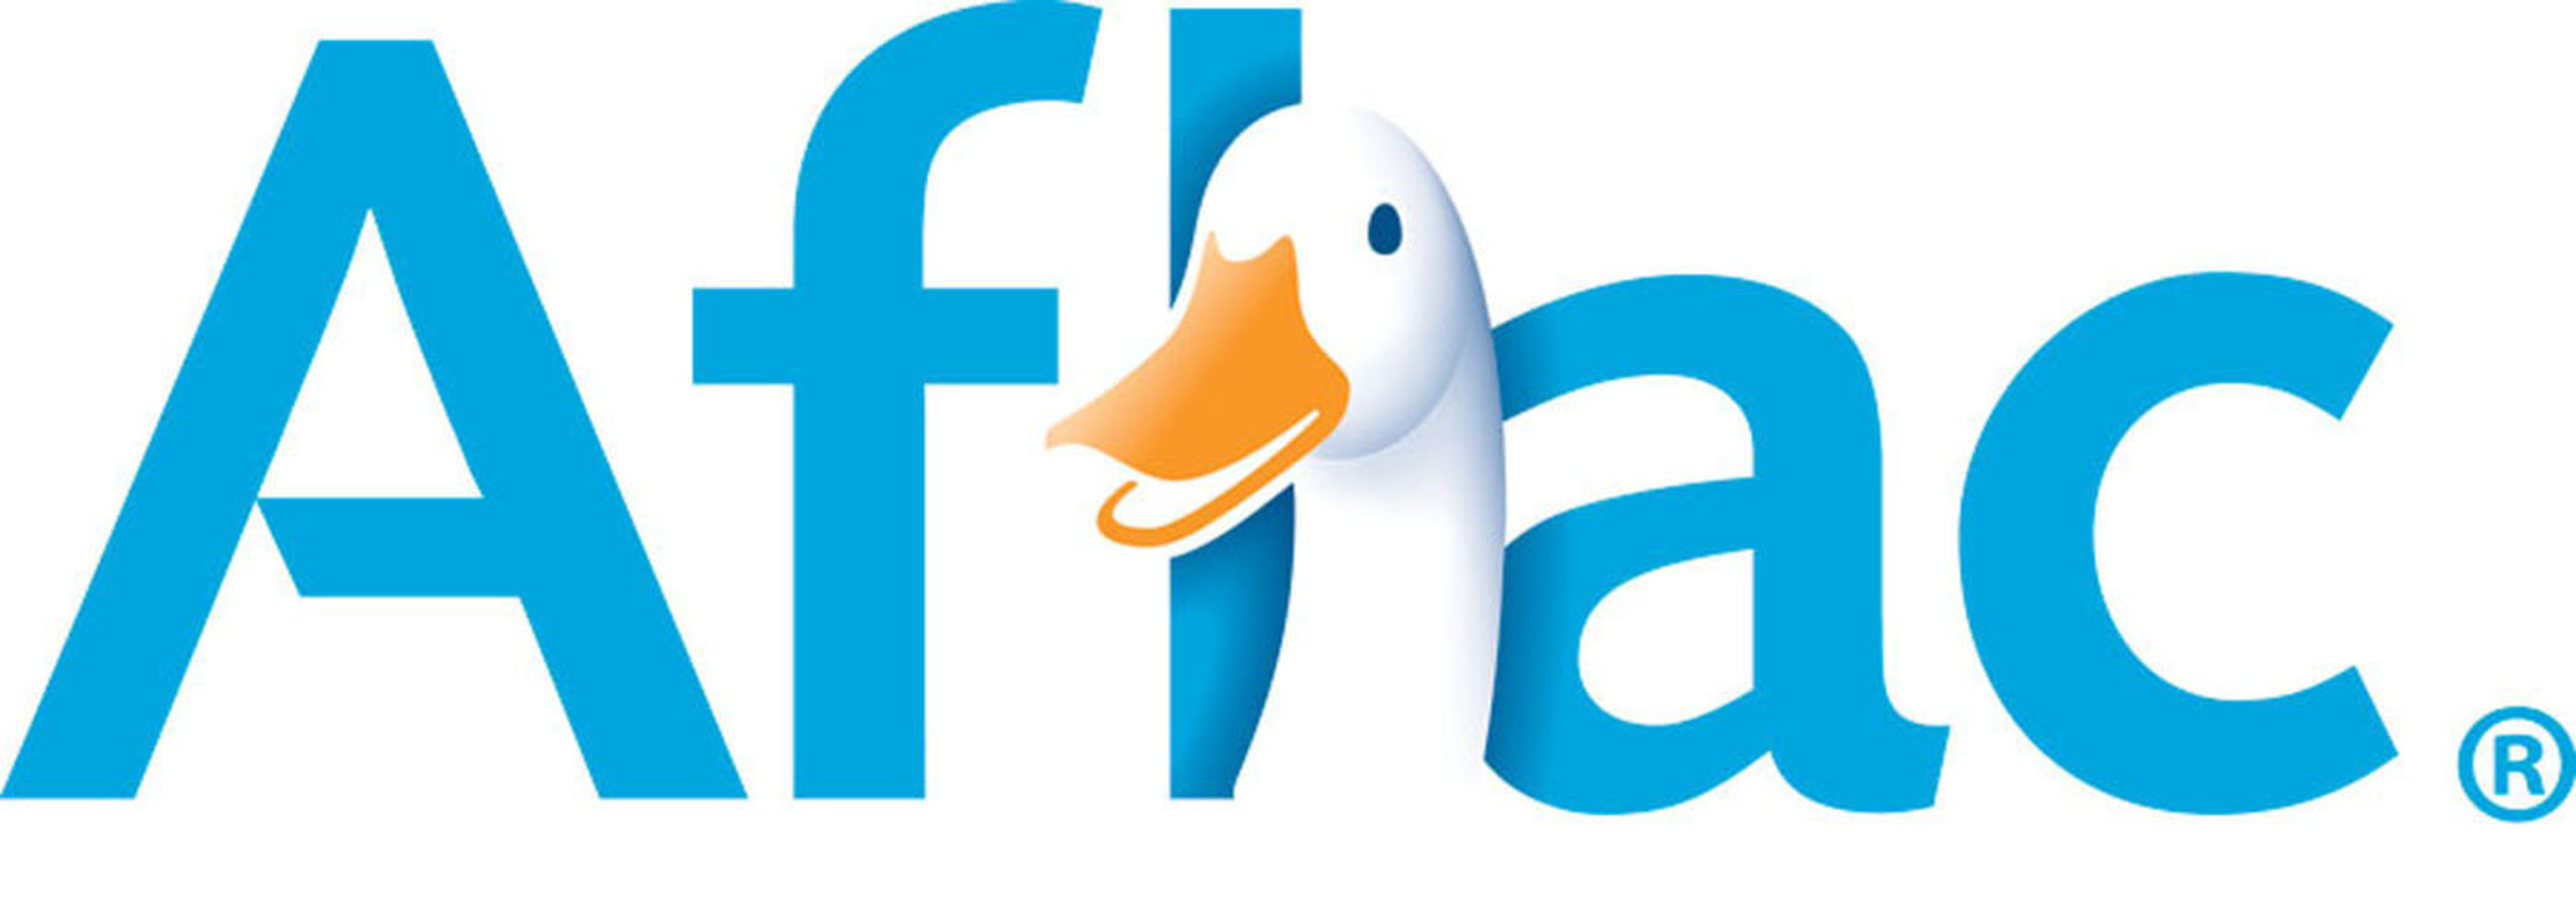 Aflac Logo. (PRNewsFoto/Aflac) (PRNewsFoto/)